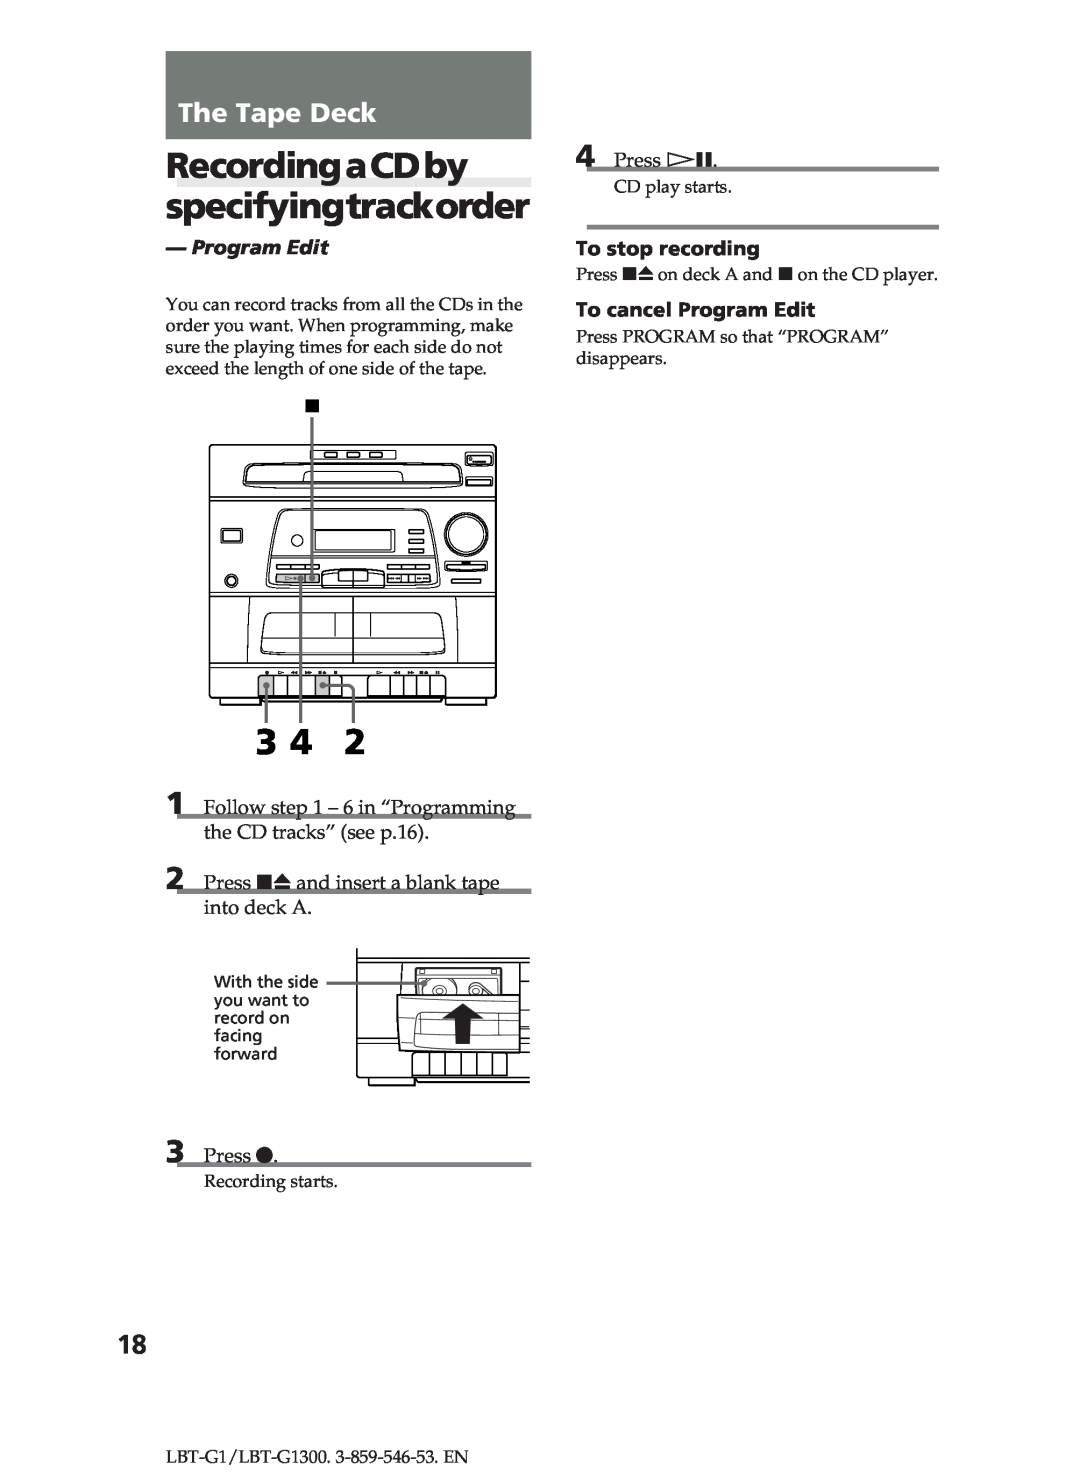 Sony LBT-G1300 manual RecordingaCDby specifyingtrackorder, The Tape Deck, Program Edit, Press r, Press áP 